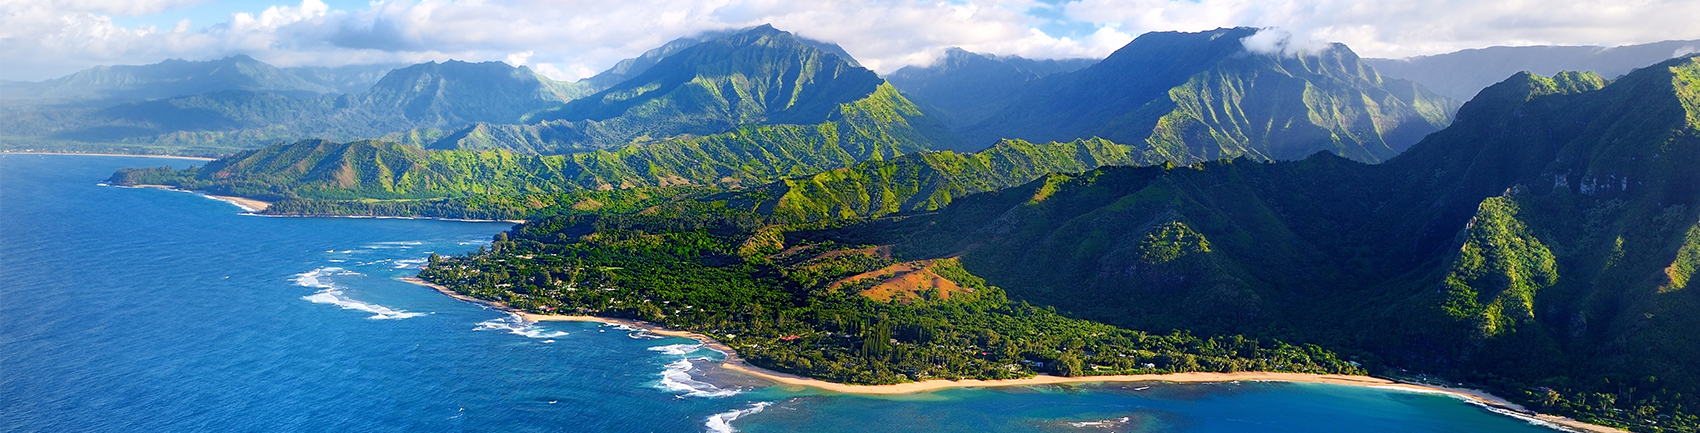 Kauai, the Garden Island | Vacation Inspiration | Aqua Aston Hotels